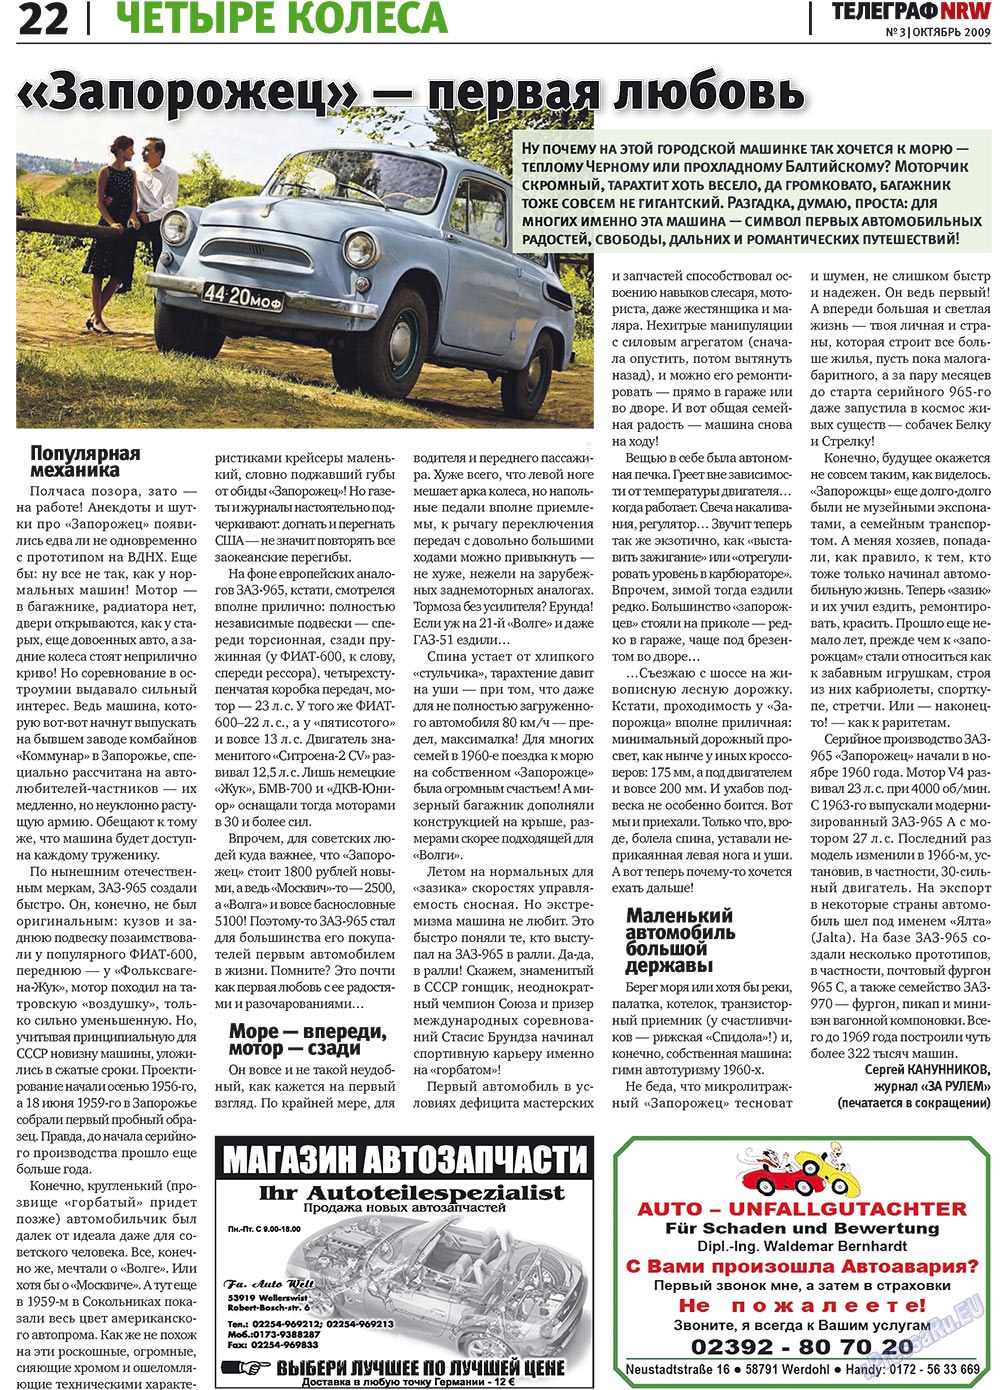 Телеграф NRW, газета. 2009 №3 стр.22